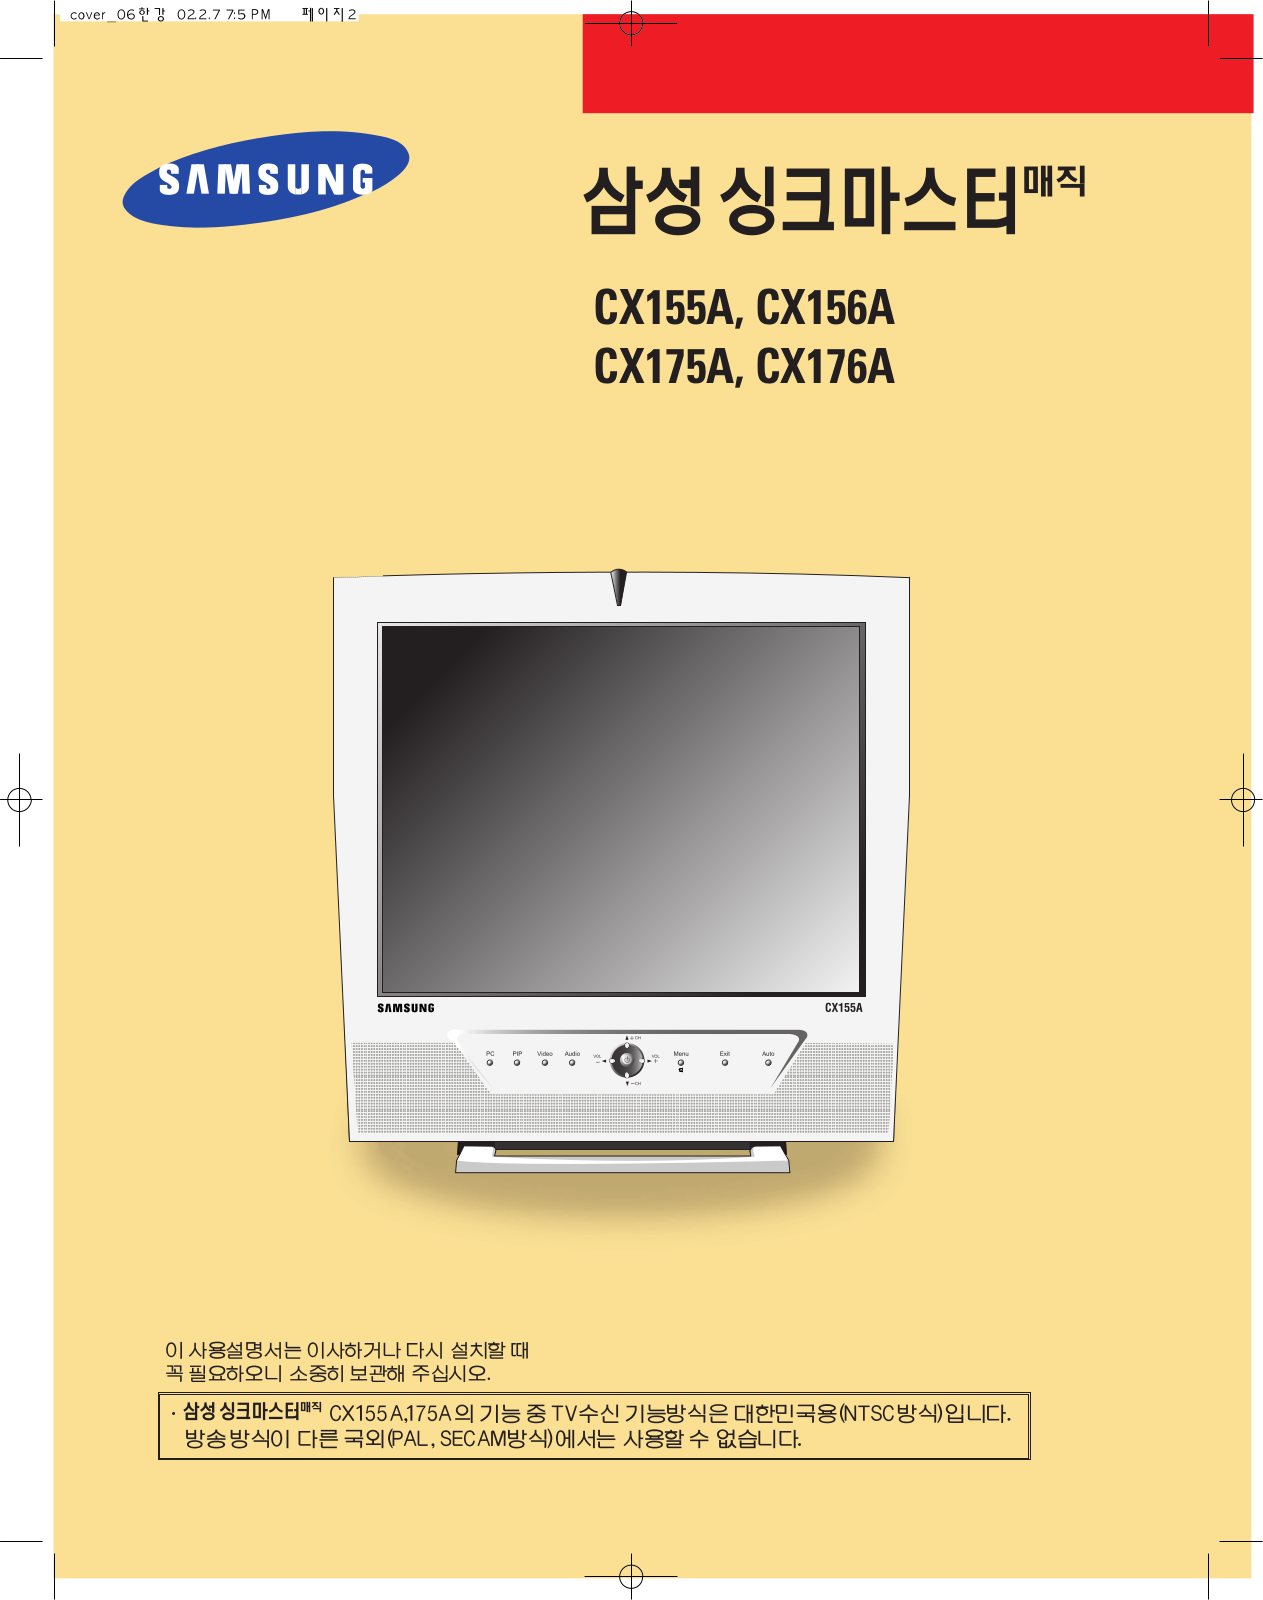 Samsung CX176A, CX156A, CX155A User Manual